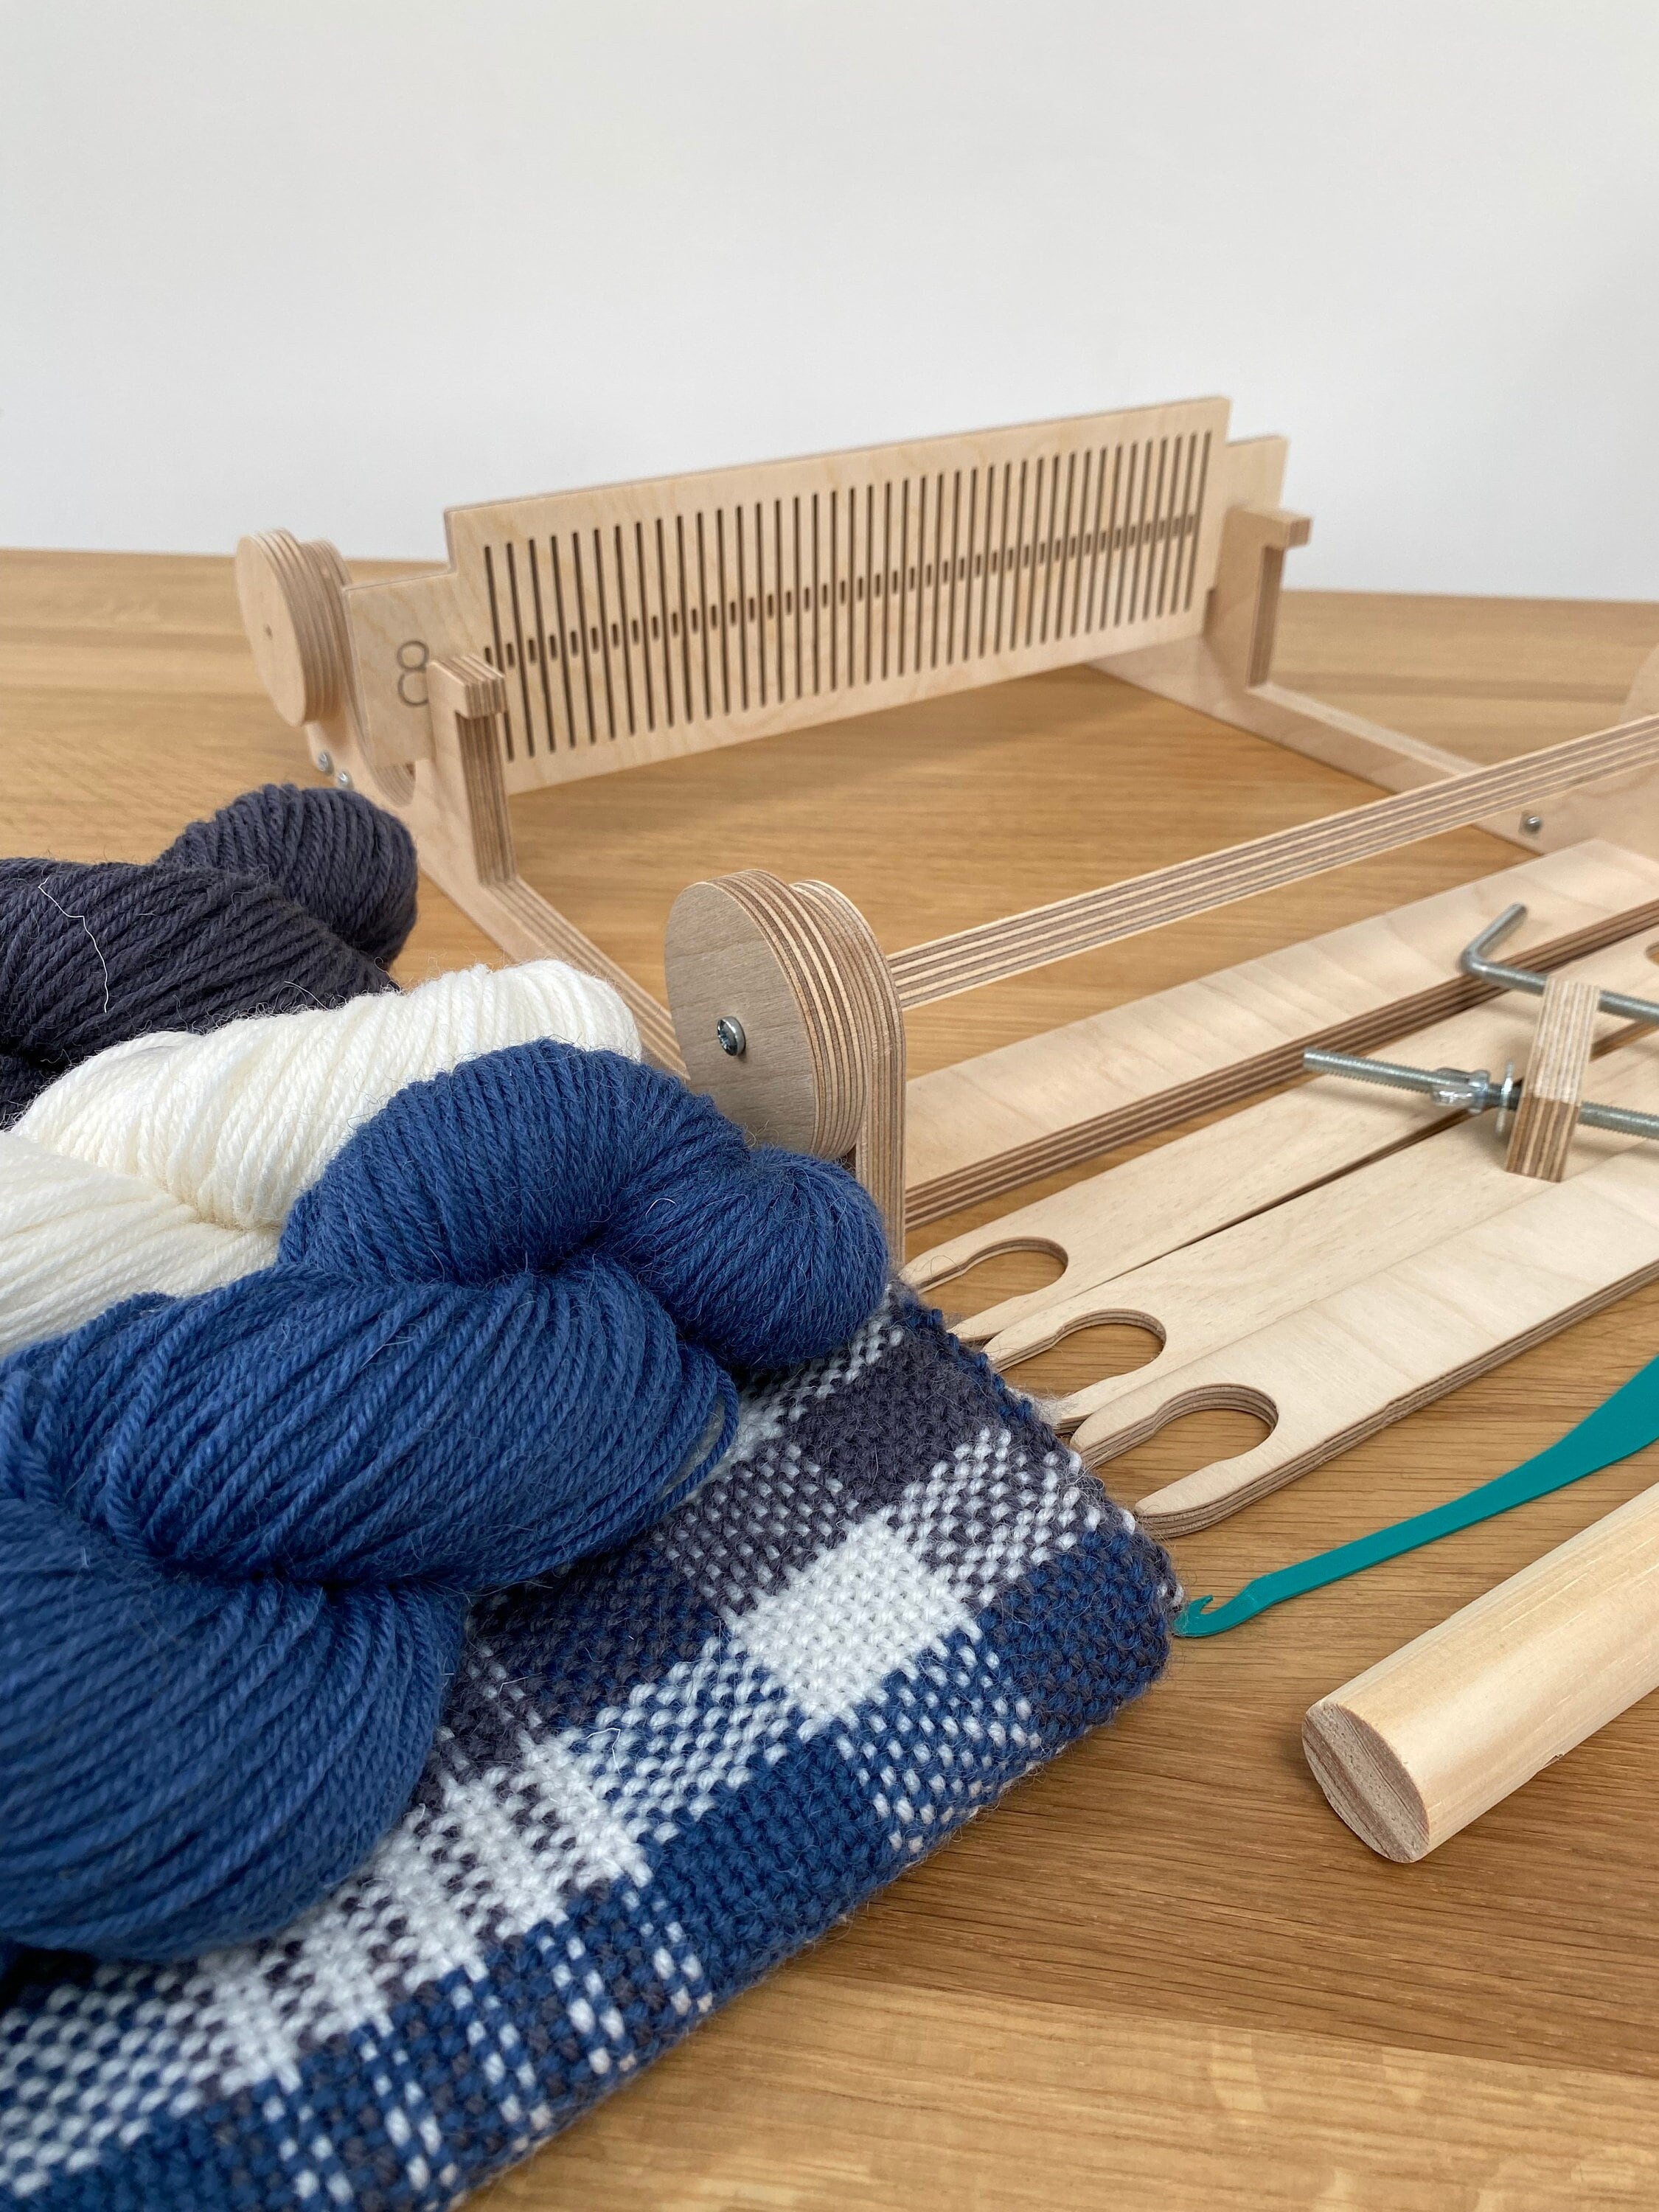 Knituk Long Knitting Loom Set of 4. All Pegs Fitted. Medium Gauge